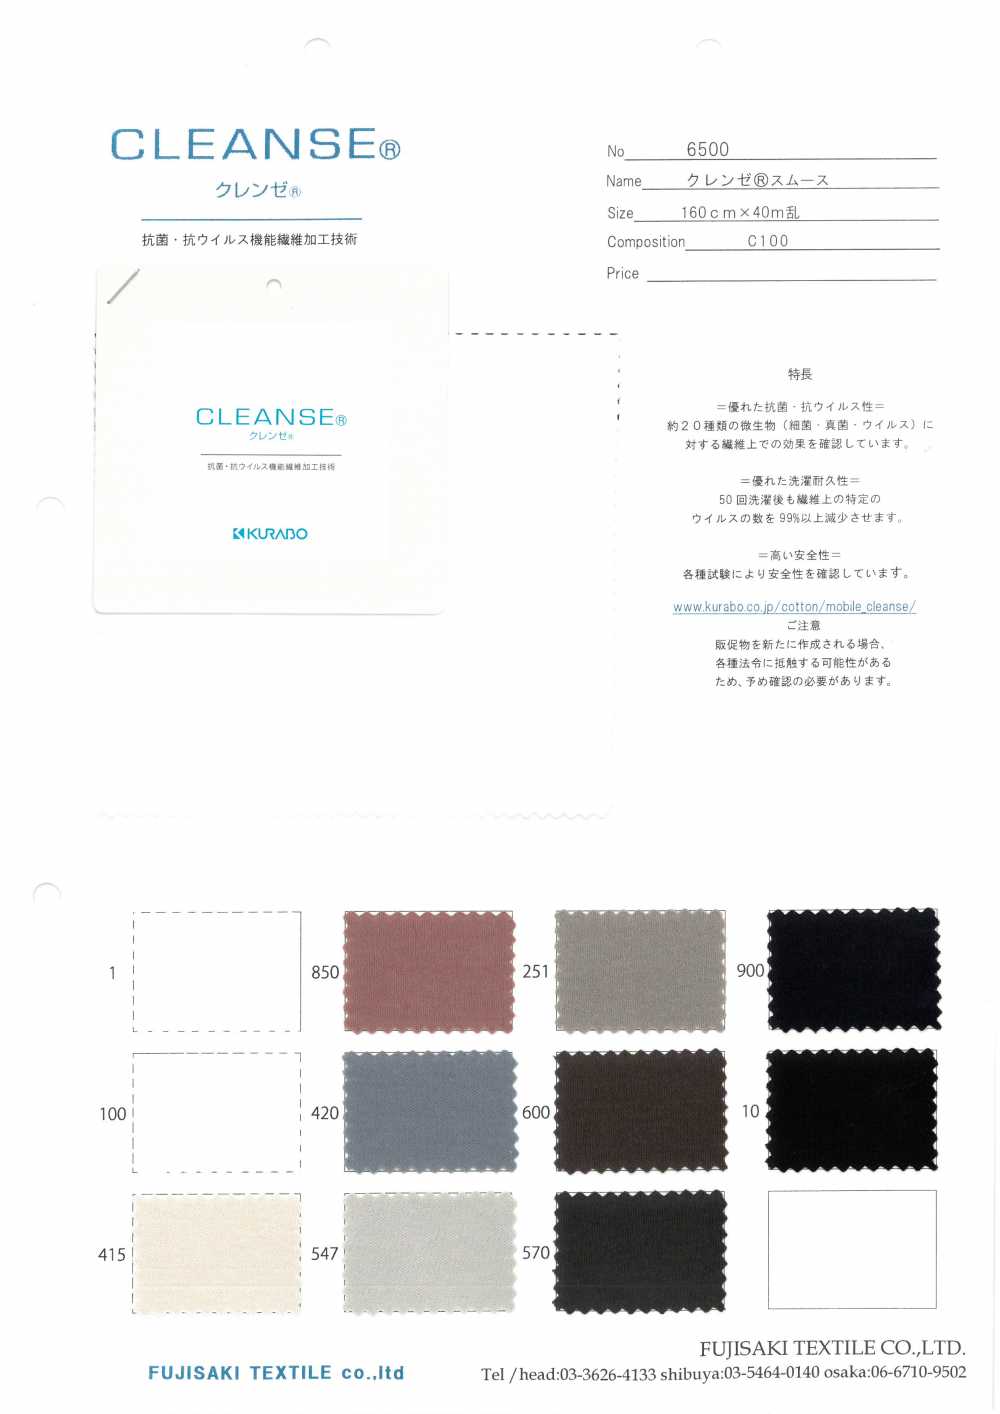 6500 CLEANSE Circular Interlock Knitting[Textile / Fabric] Fujisaki Textile